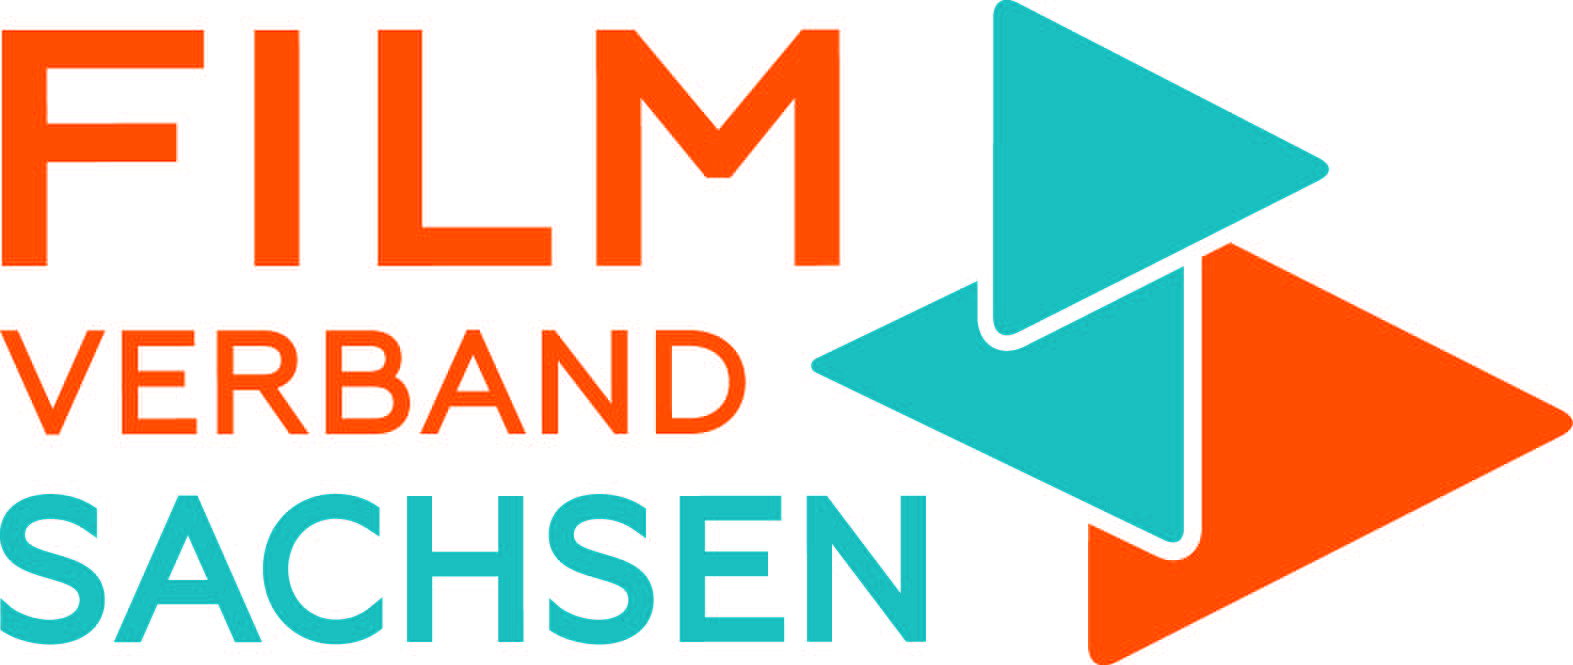 Logo Filmverband Sachsen